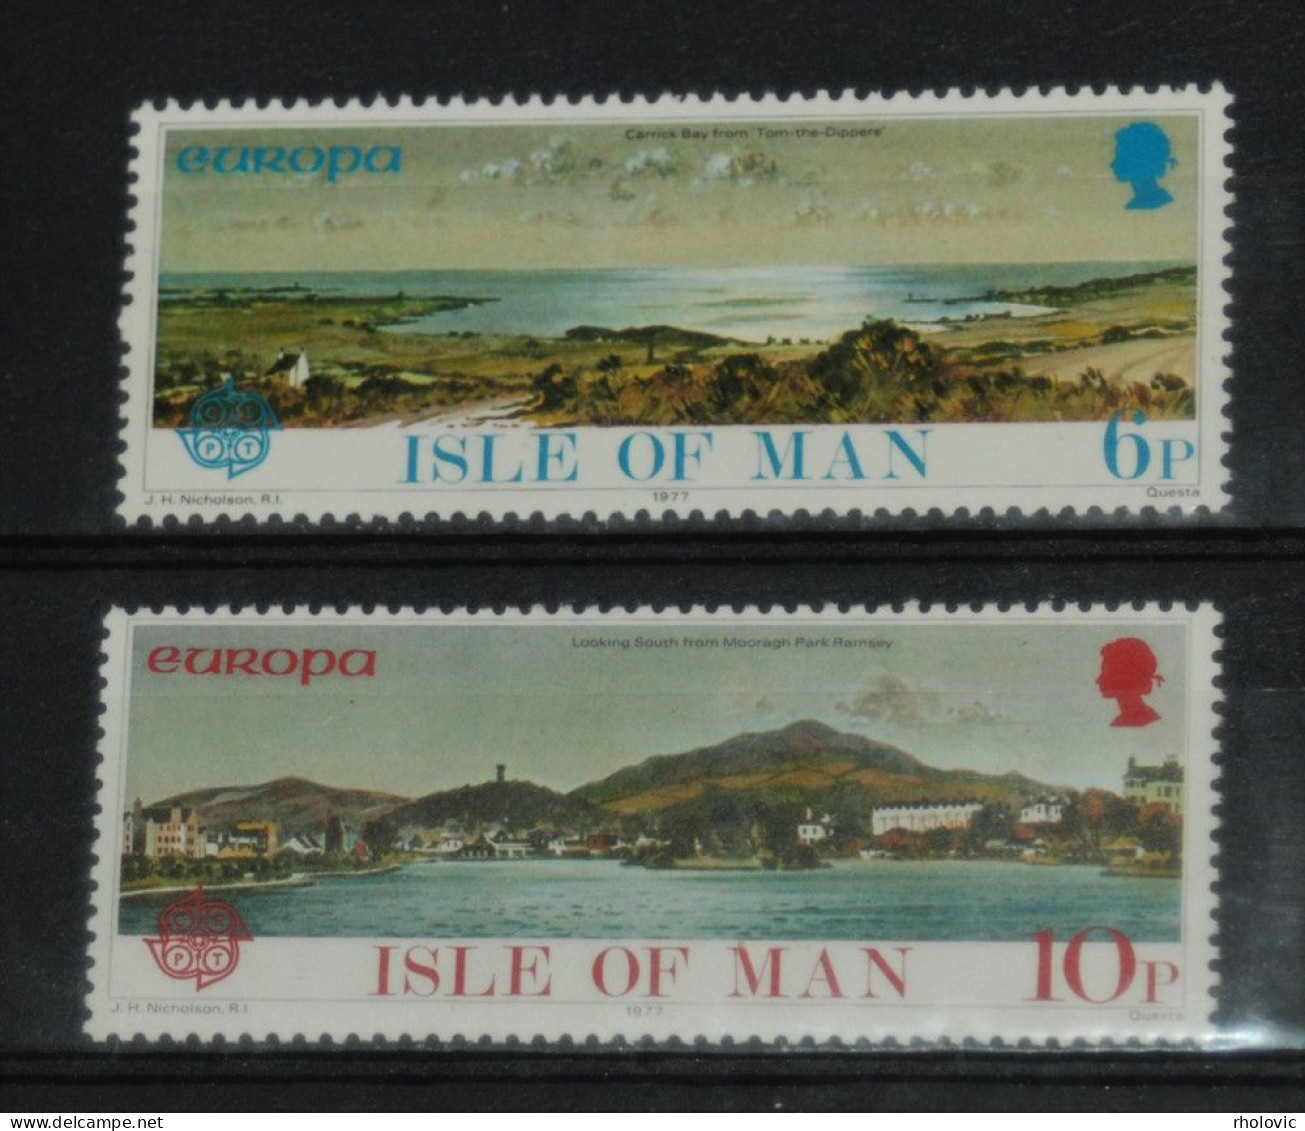 ISLE OF MAN 1977, Europa – Landscapes, Mountains, Mi #95-6, MNH** - Mountains